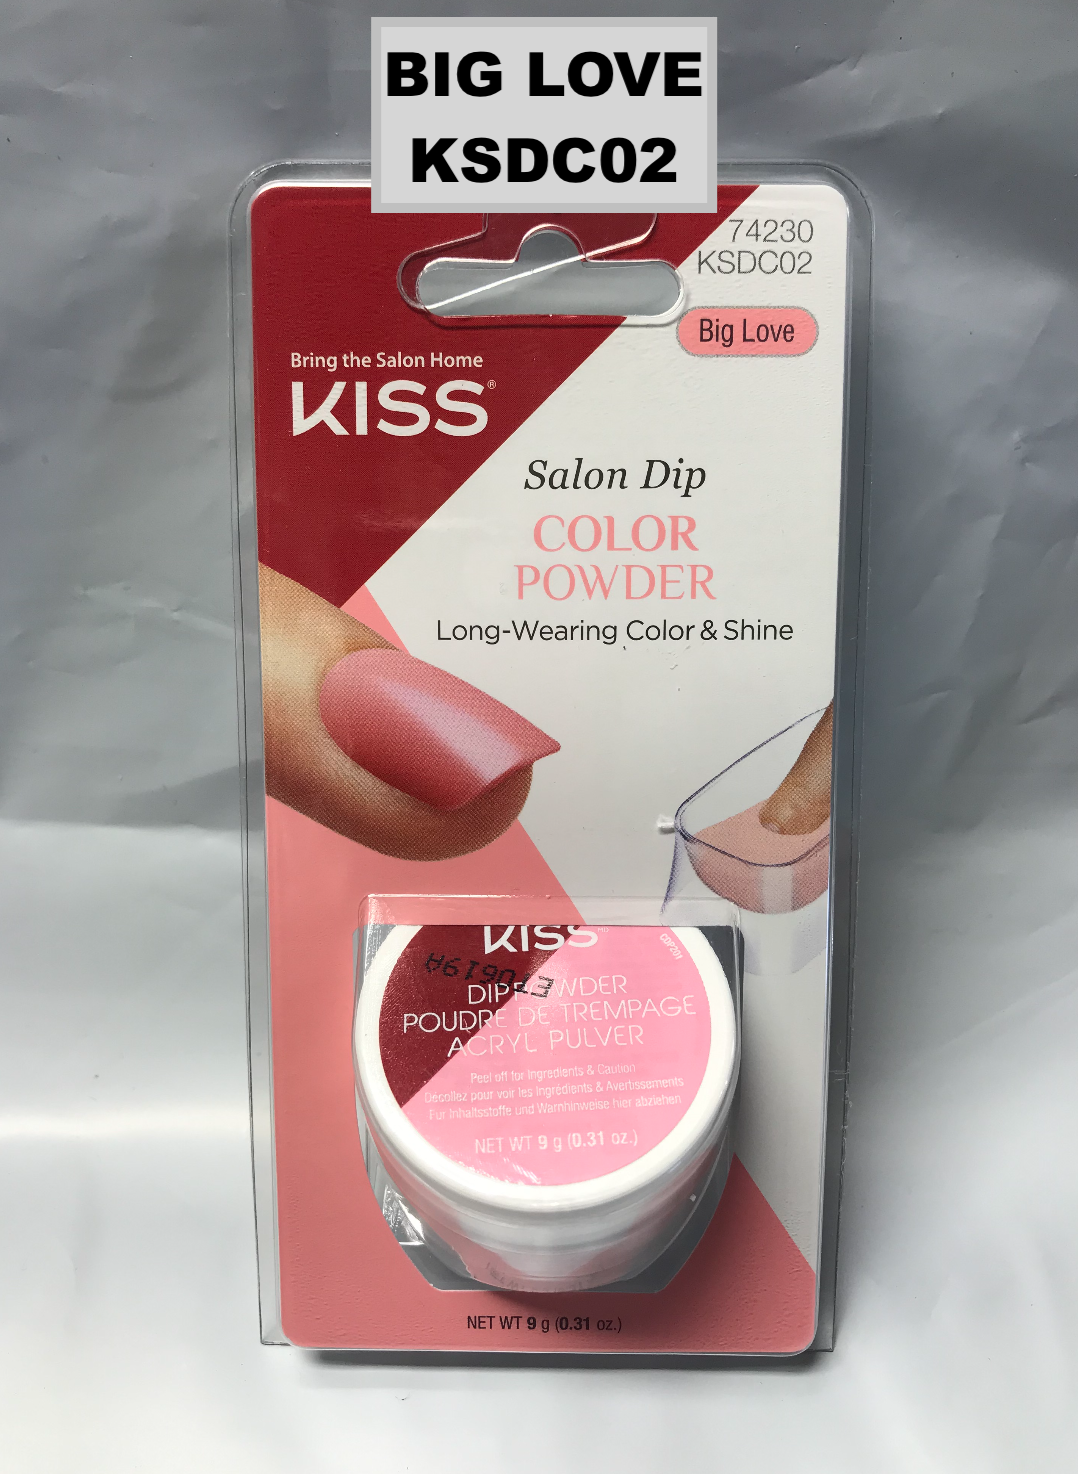 KISS SALON DIP COLOR POWDER 'KSDC02' BIG LOVE LONG-WEARING COLOR & SHINE - $6.95